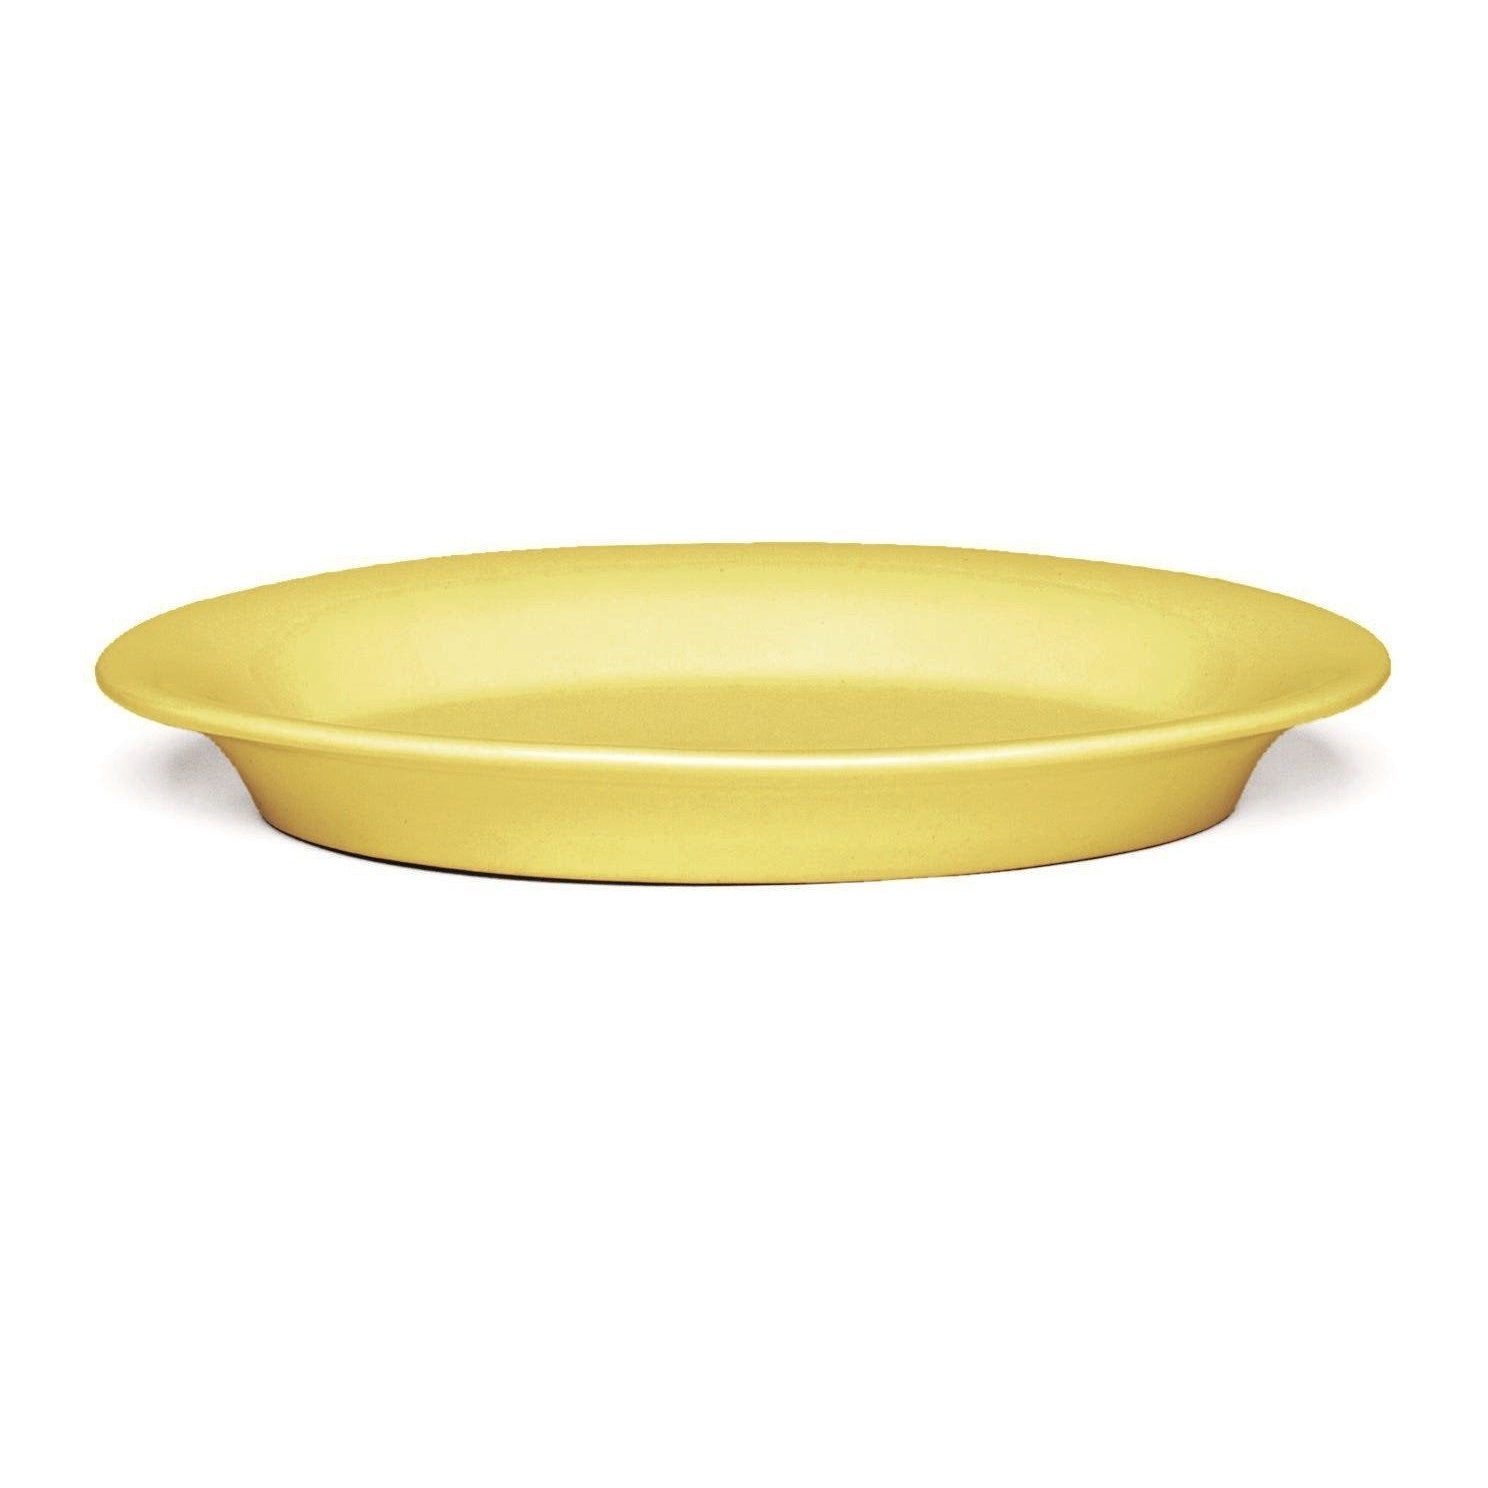 Kähler Ursula Plate amarillo, Ø18